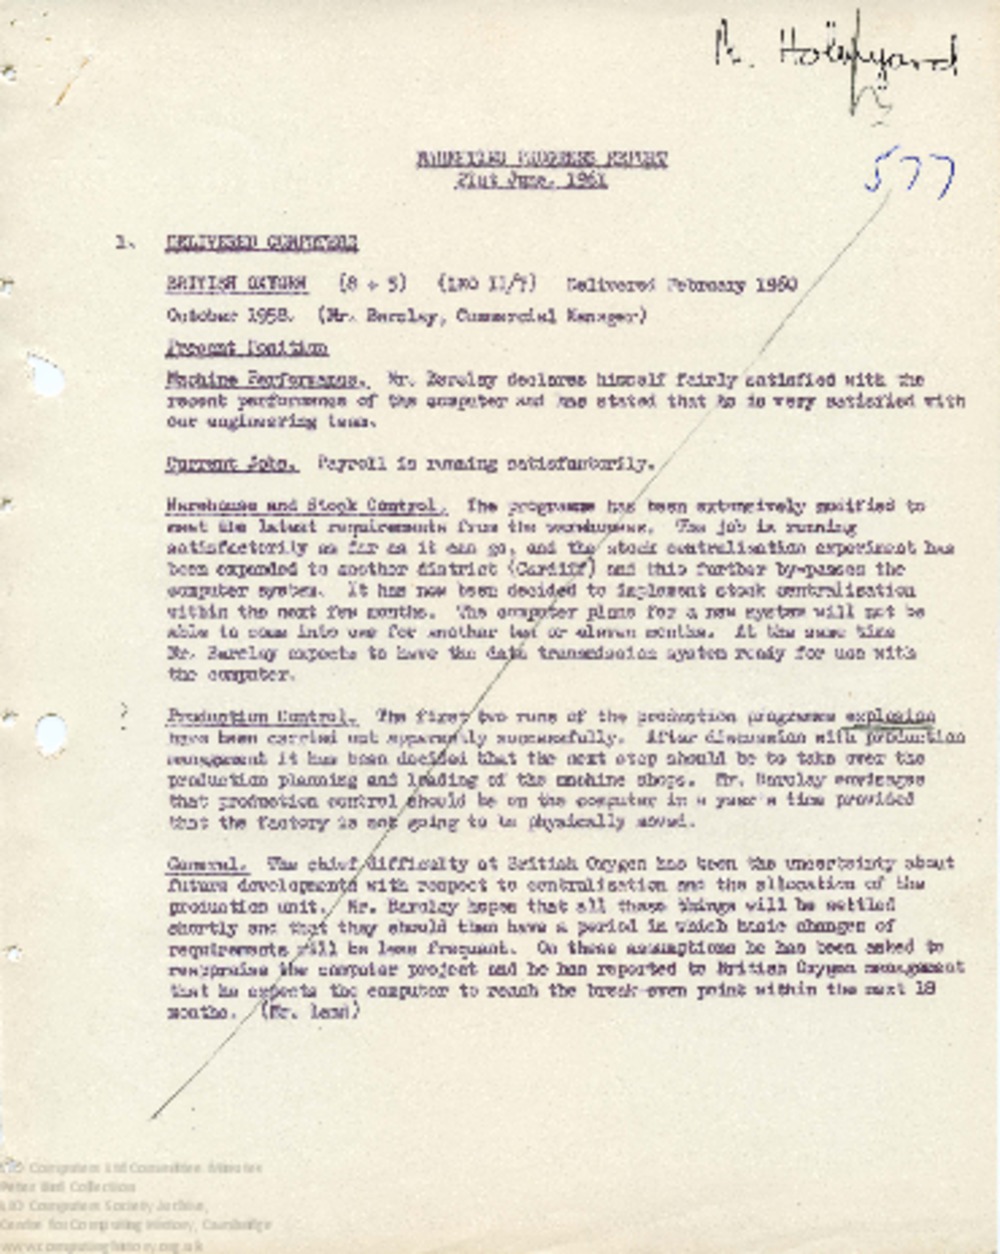 Article: 64501 Marketing Progress Report, 21st June 1961